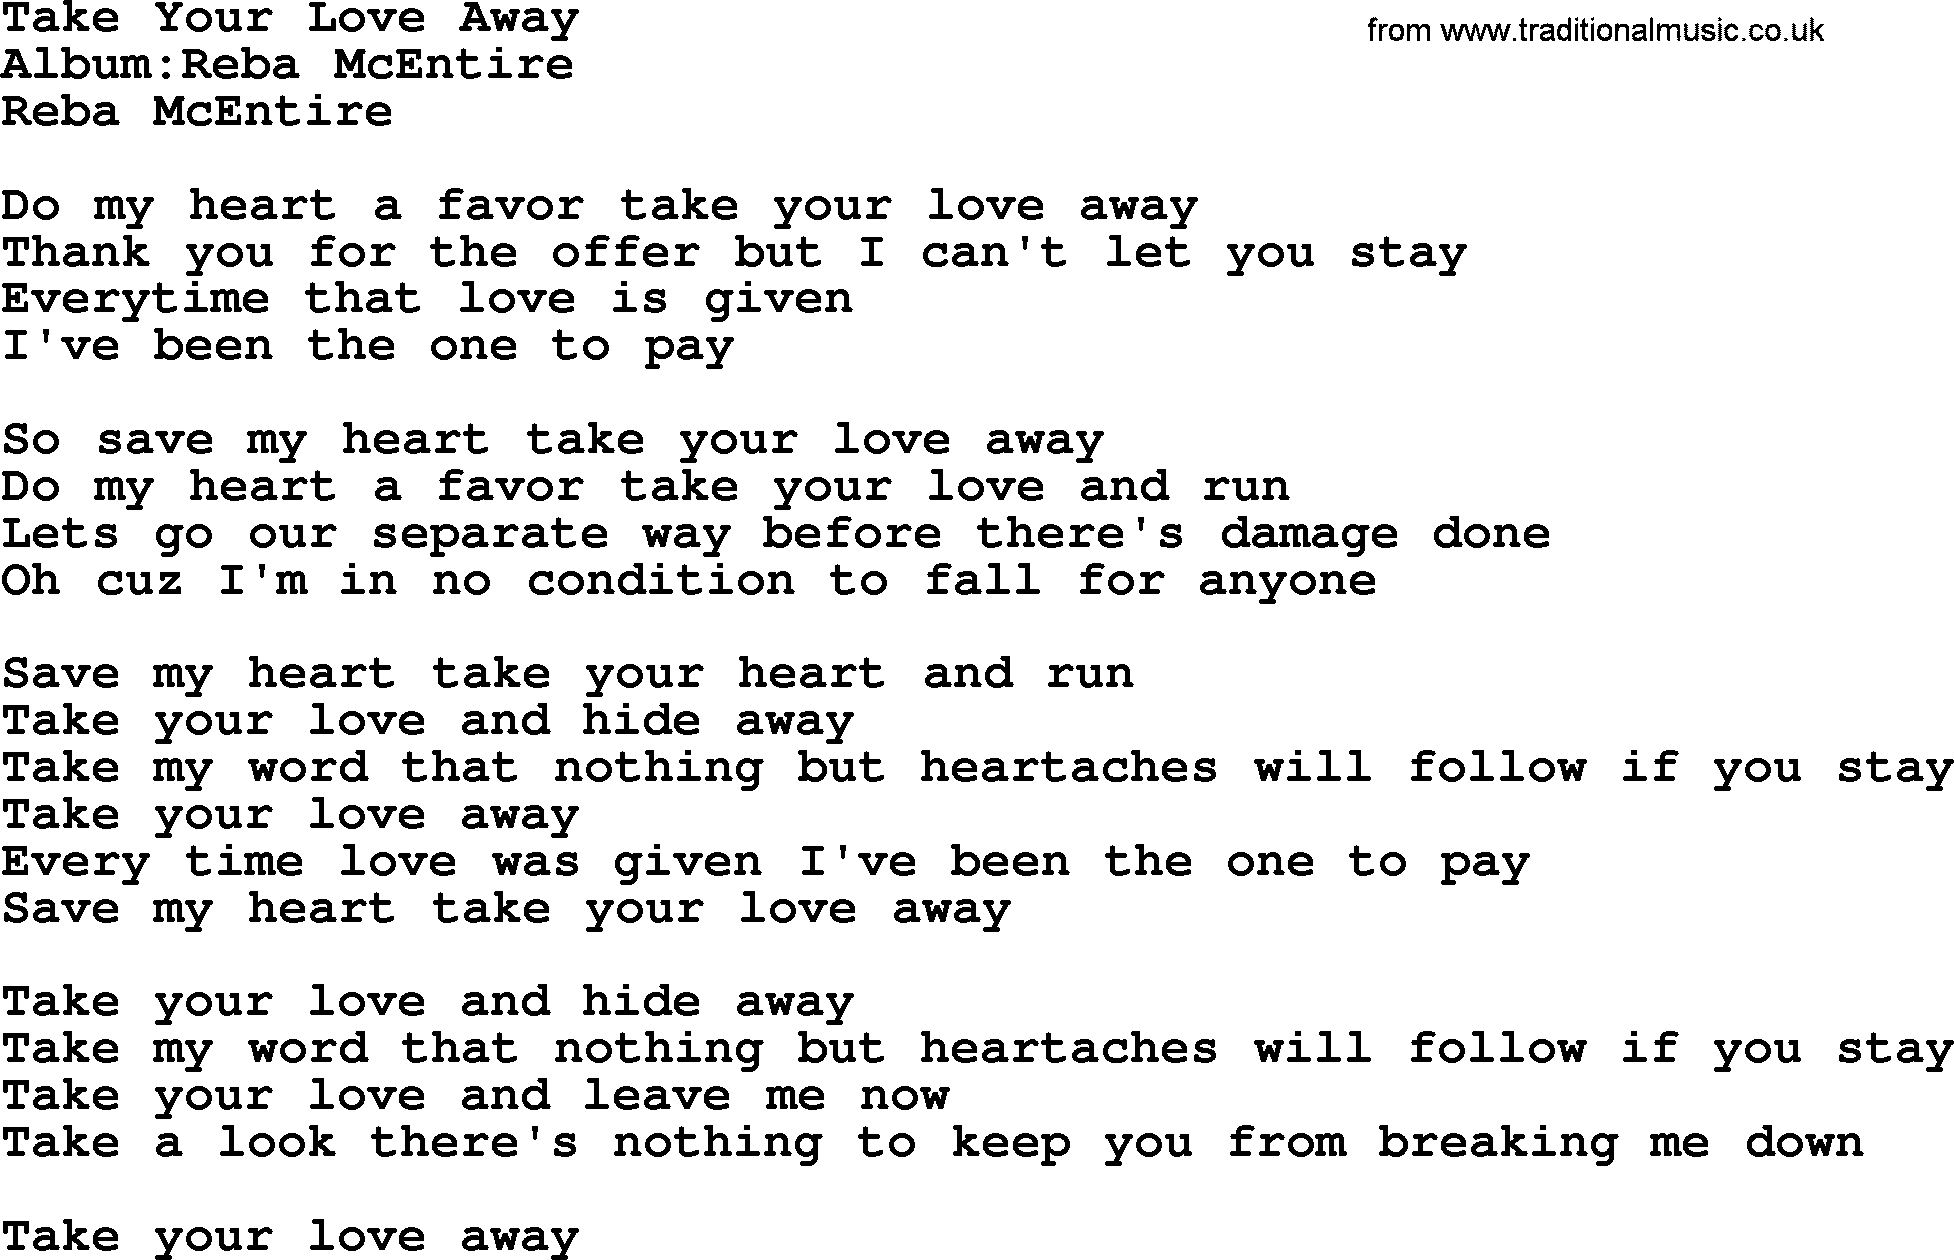 Reba McEntire song: Take Your Love Away lyrics